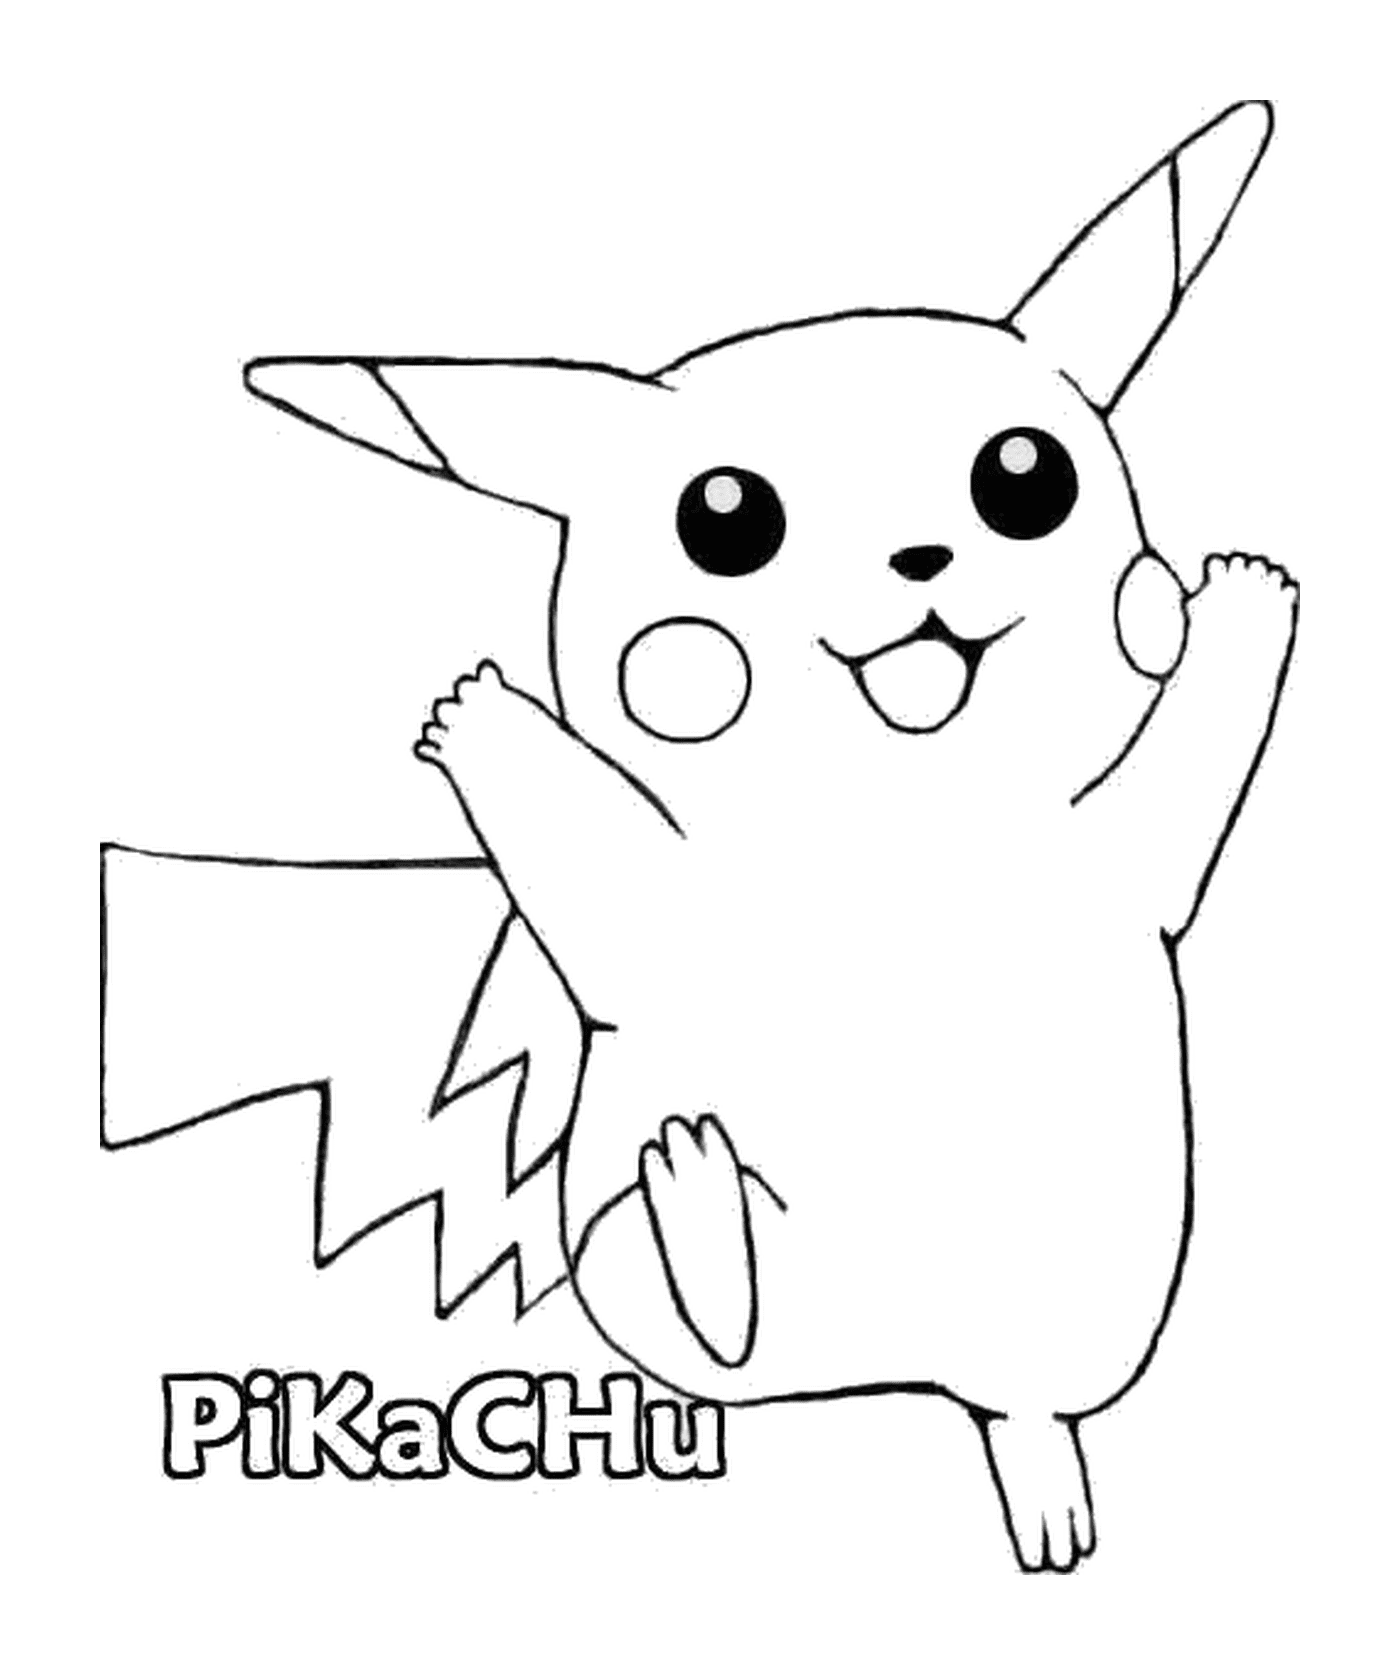  Pikachu: Adorabile mouse elettrico 